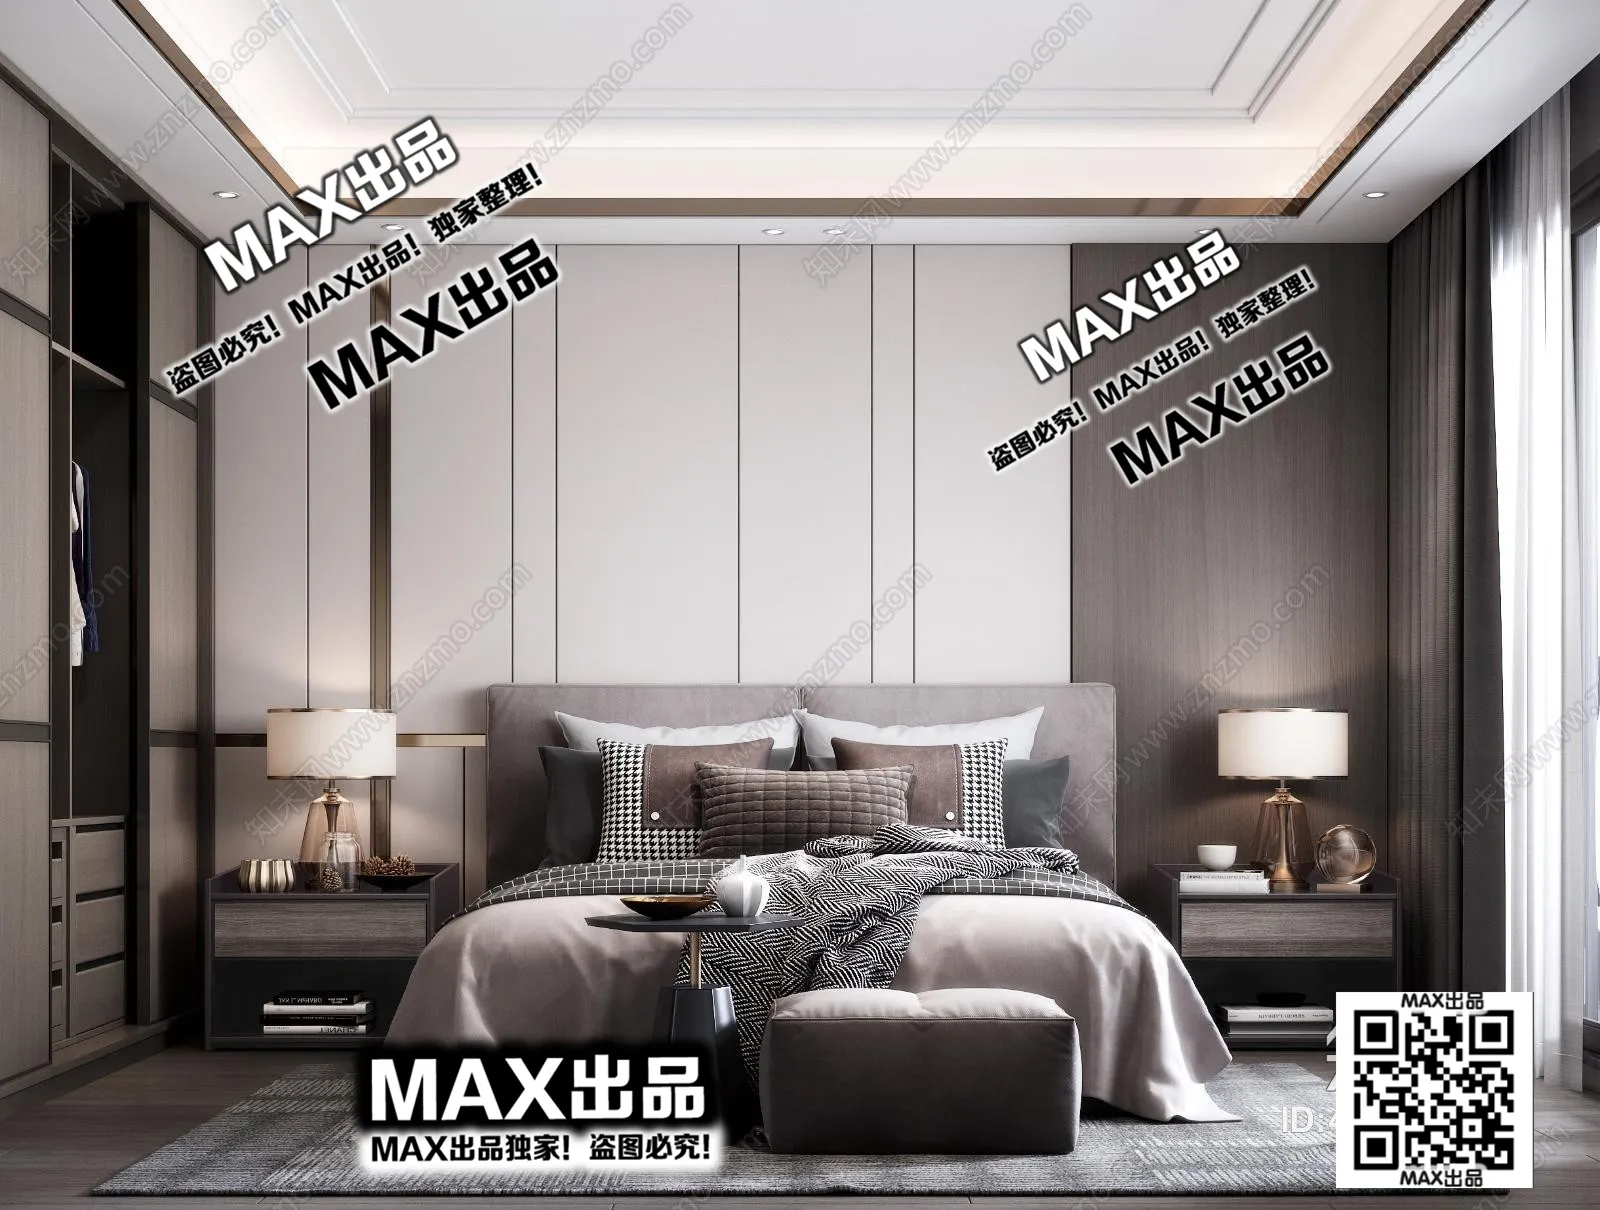 3DS MAX SCENES – LIVING ROOM – 010